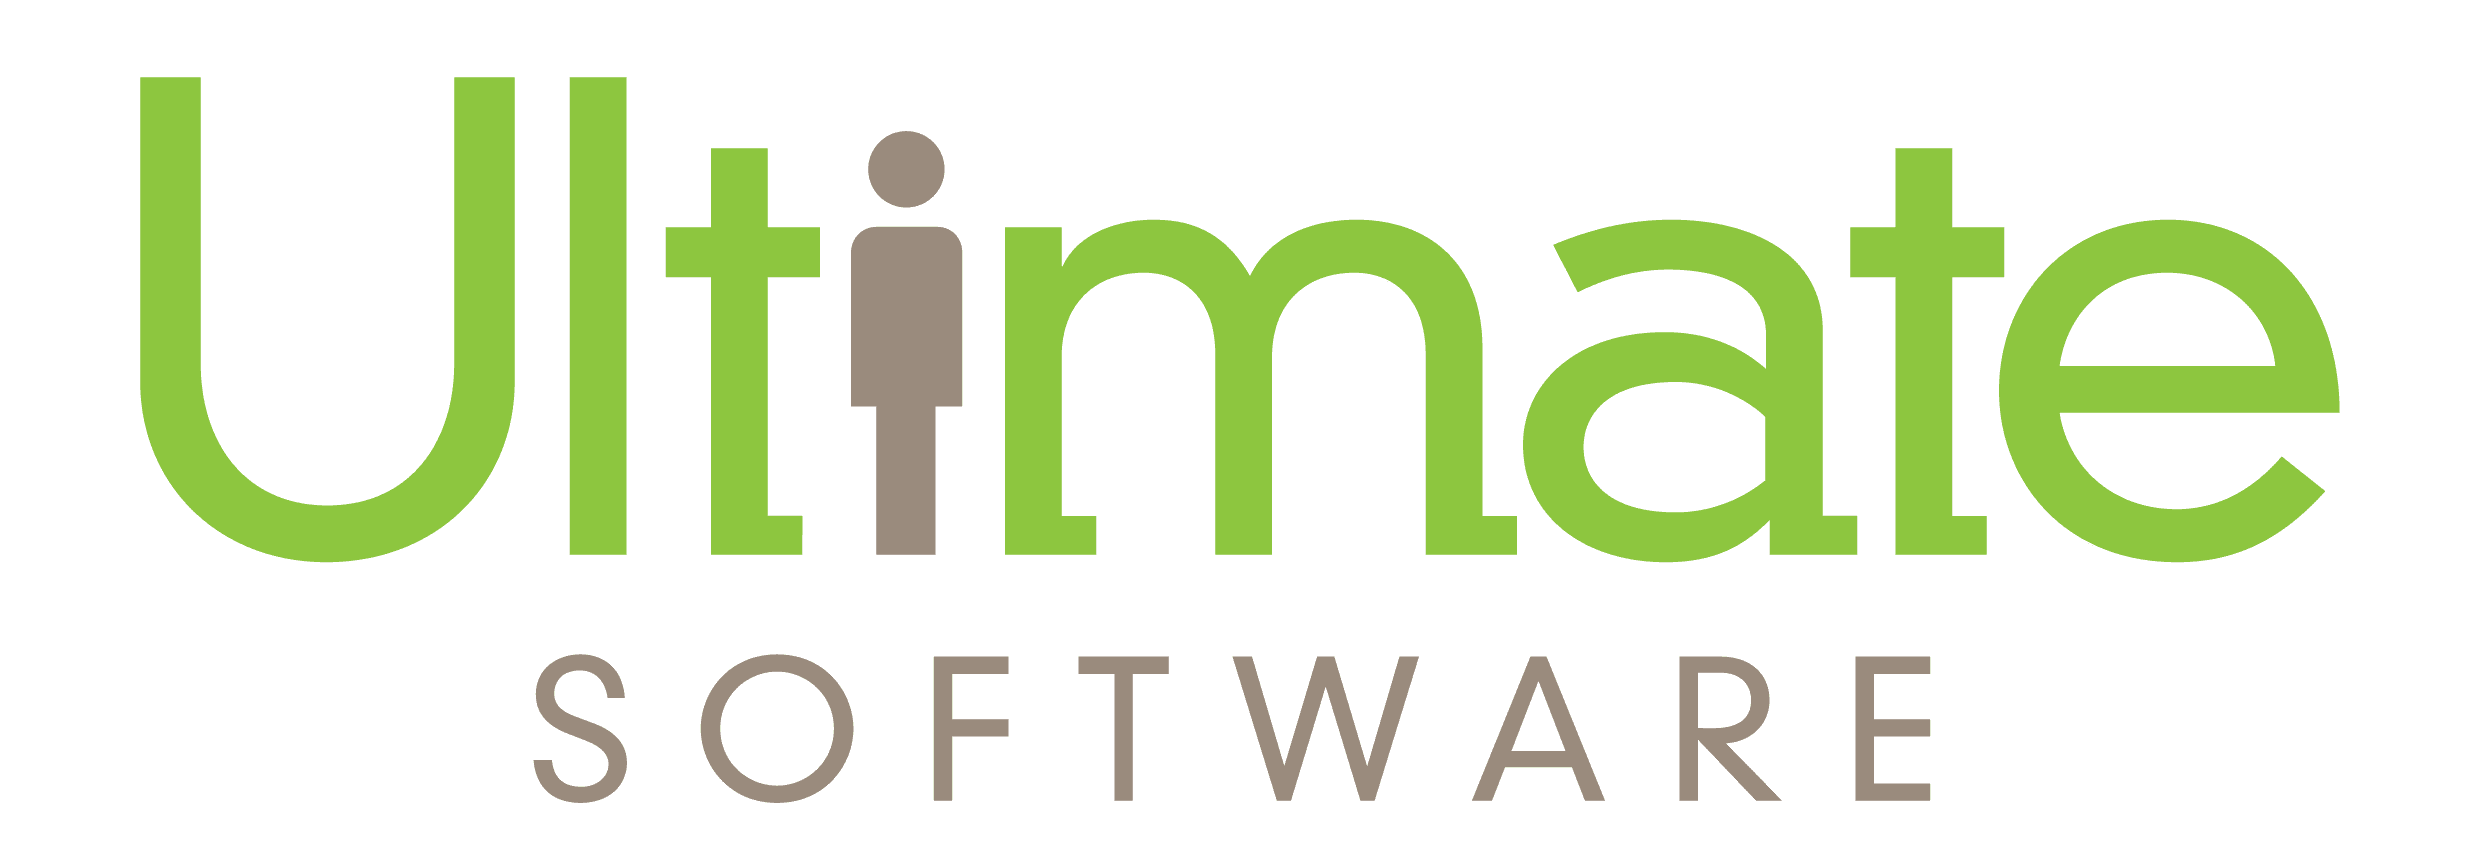 ultimate_software_logo-01